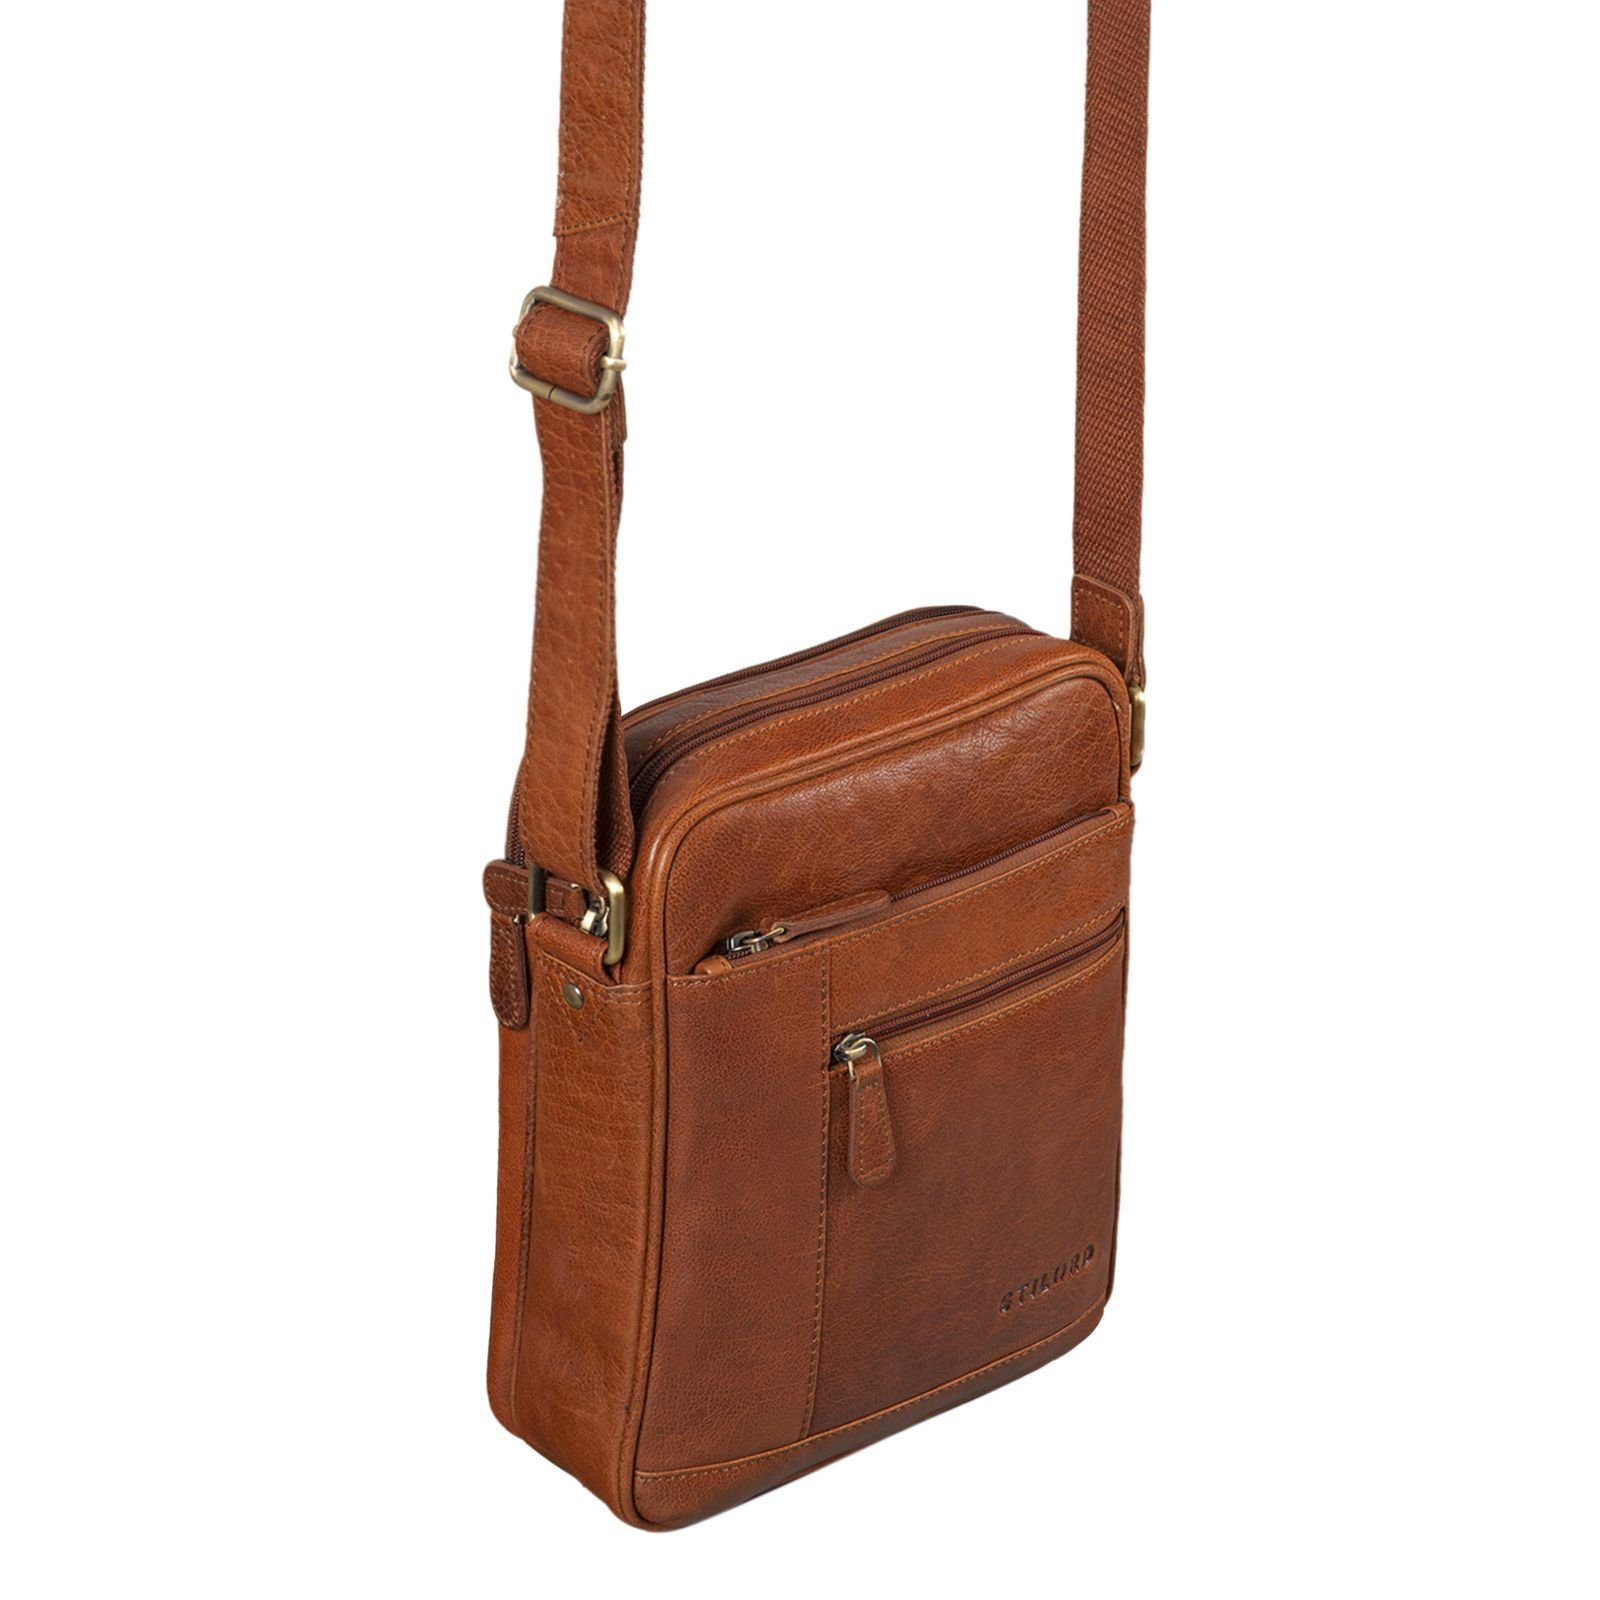 STILORD Messenger Bag maraska "Diego" Vintage Herrentasche Leder braun - klein